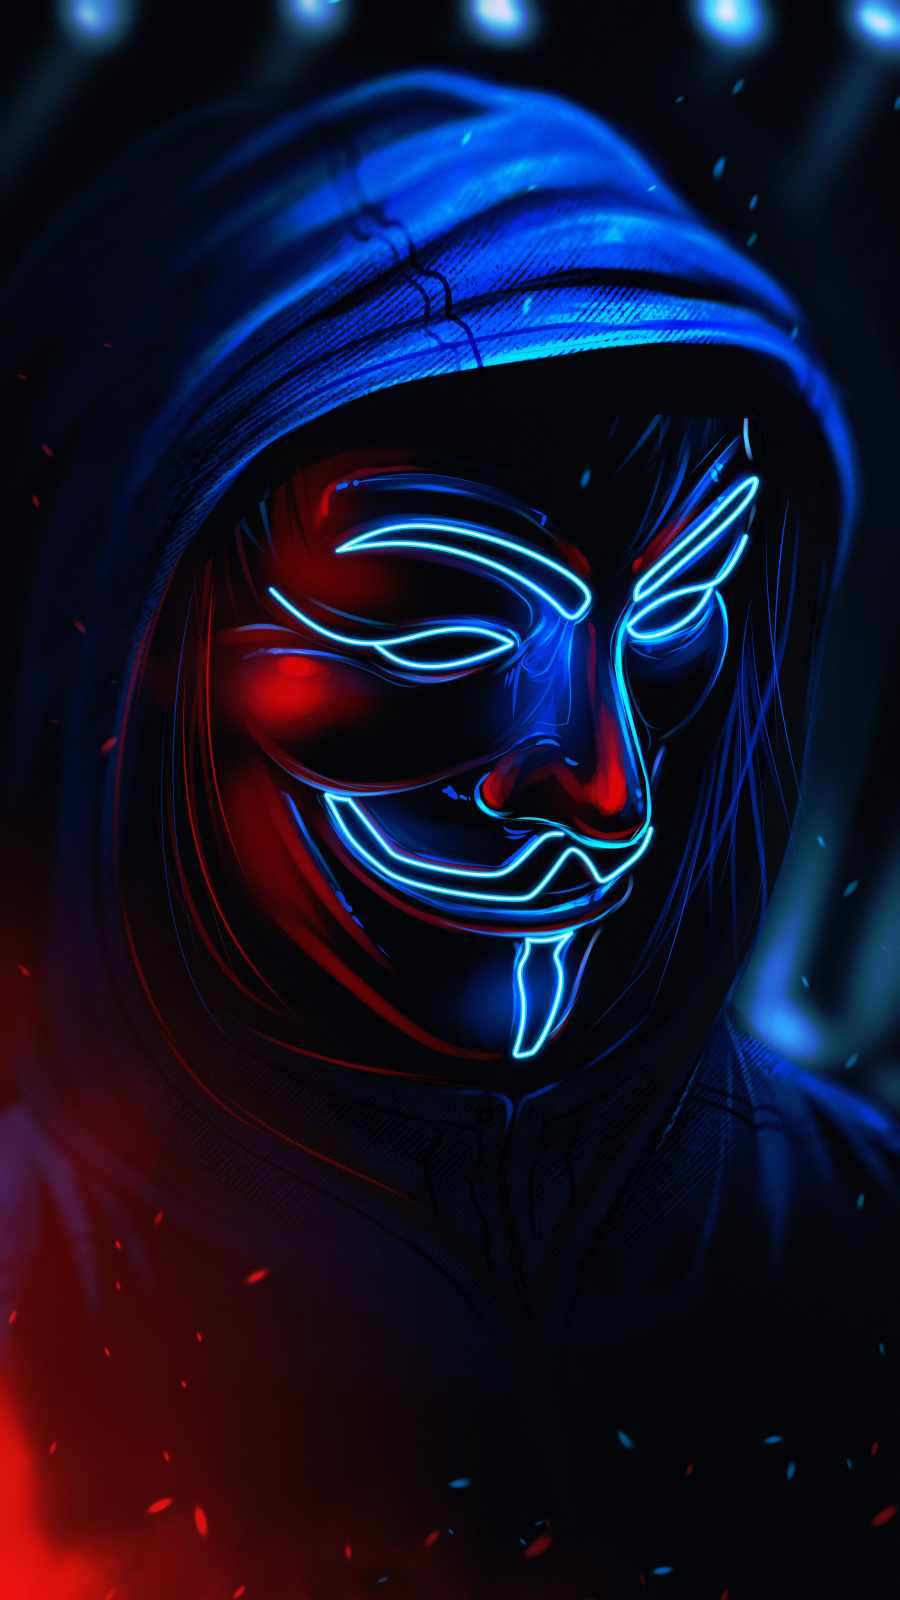 Neon Mask in Hoodie iPhone Wallpaper